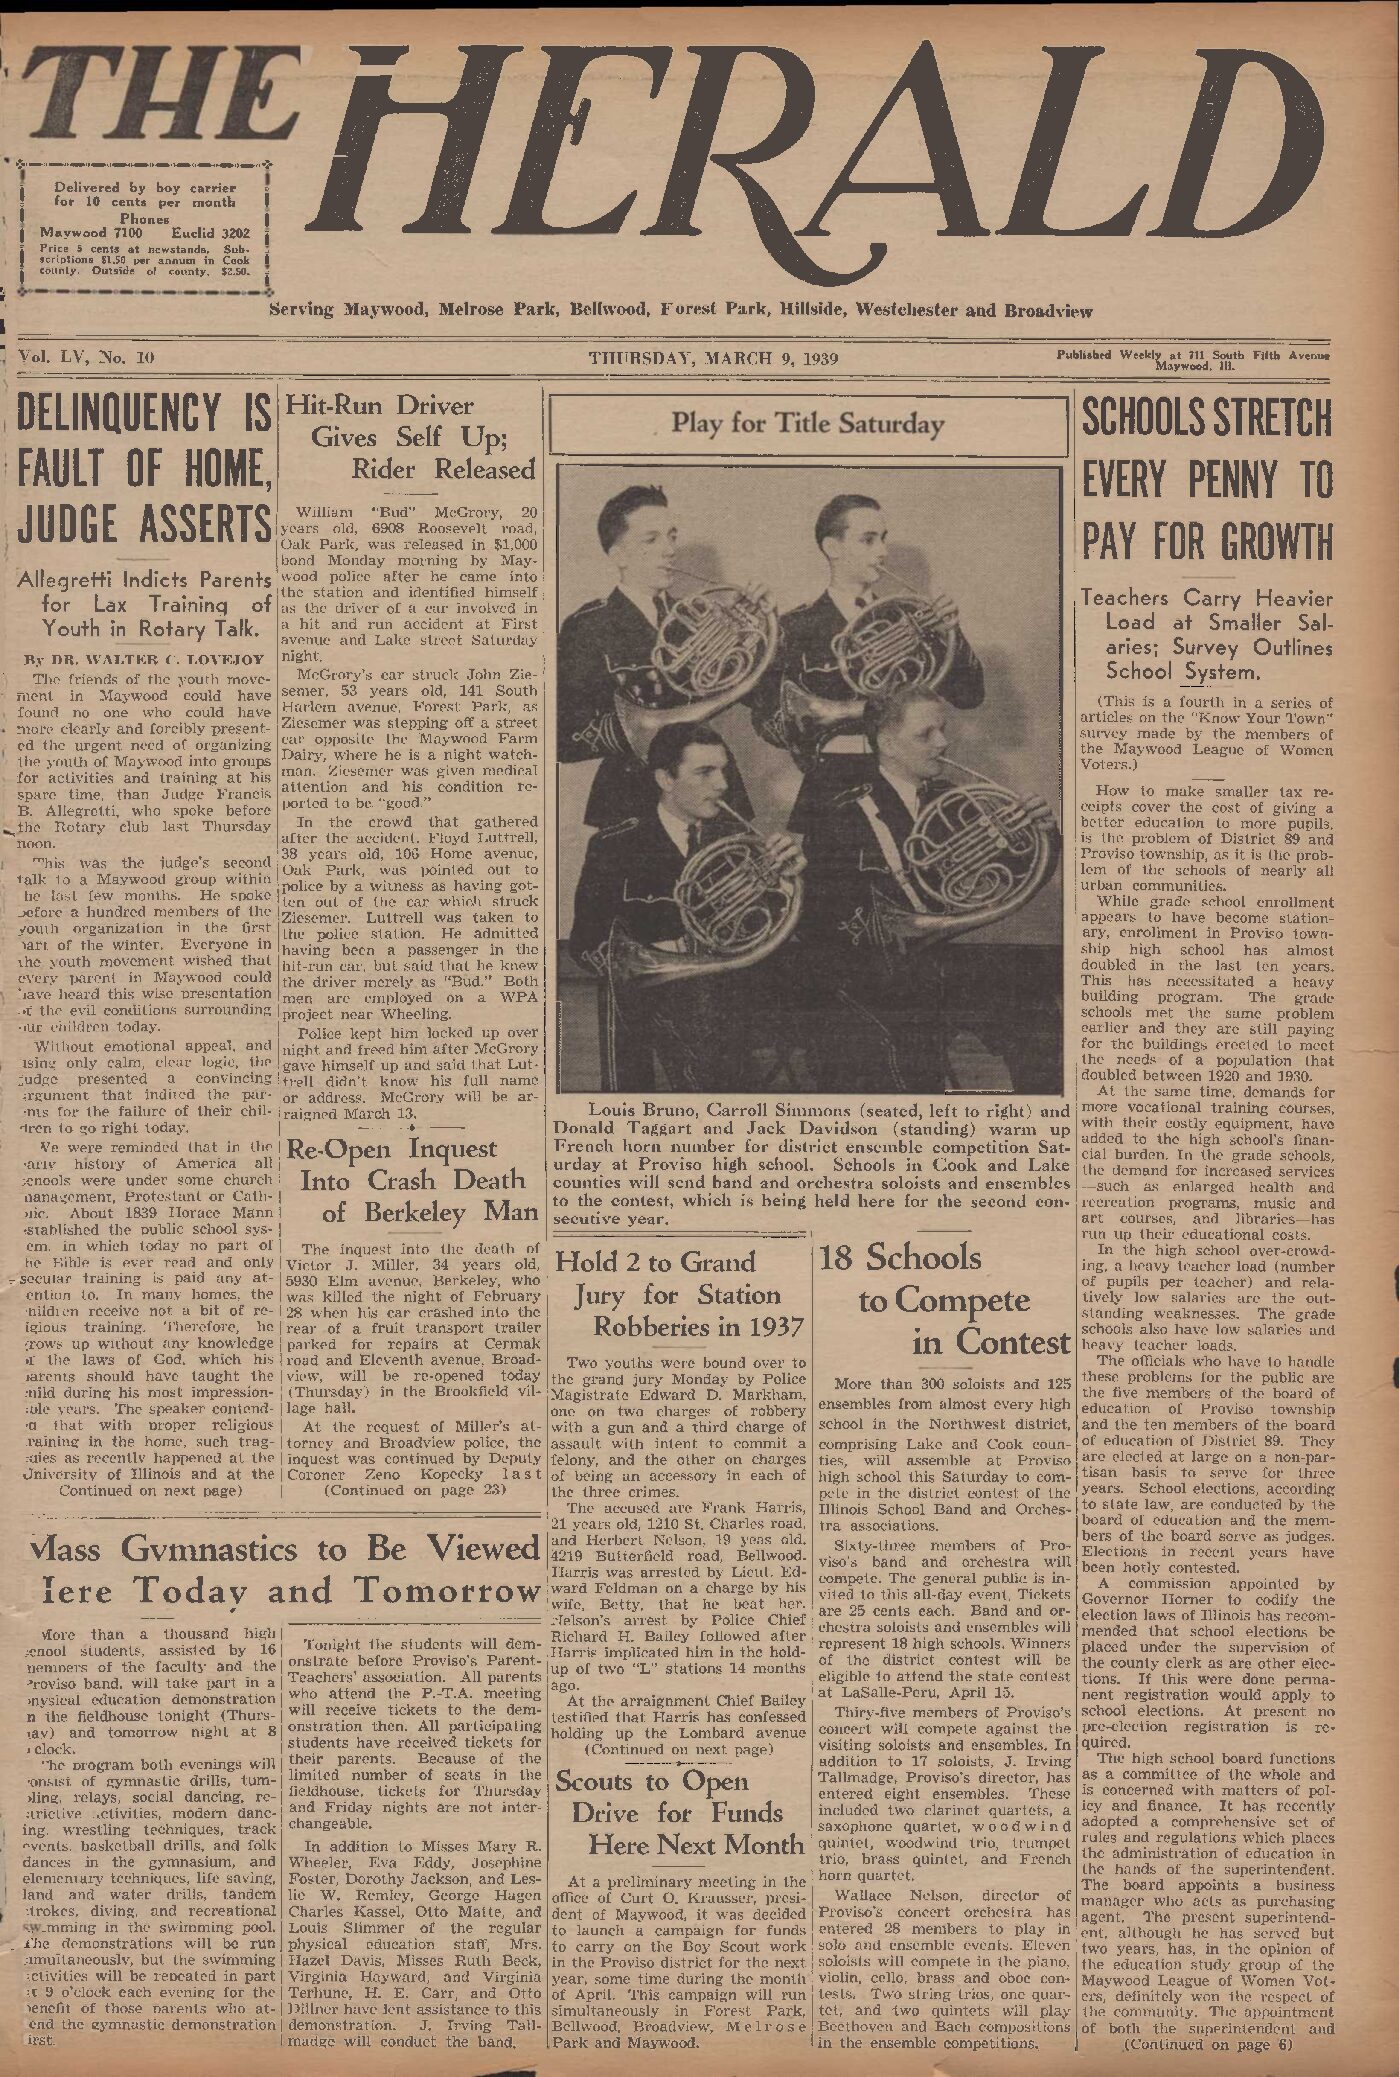 The Herald – 19390309